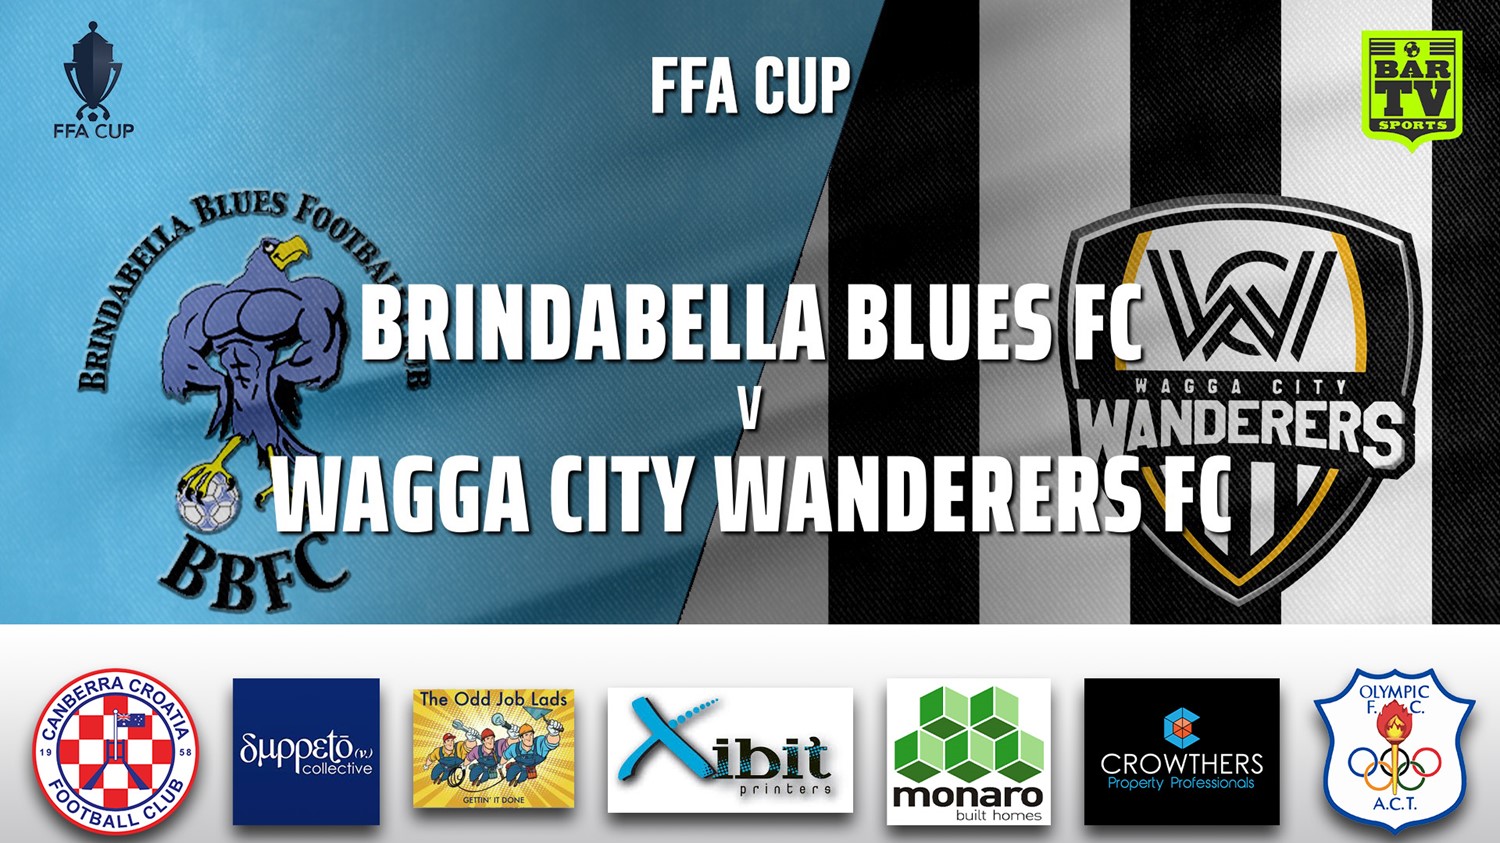 FFA Cup Qualifying Canberra Brindabella Blues FC v Wagga City Wanderers FC Slate Image